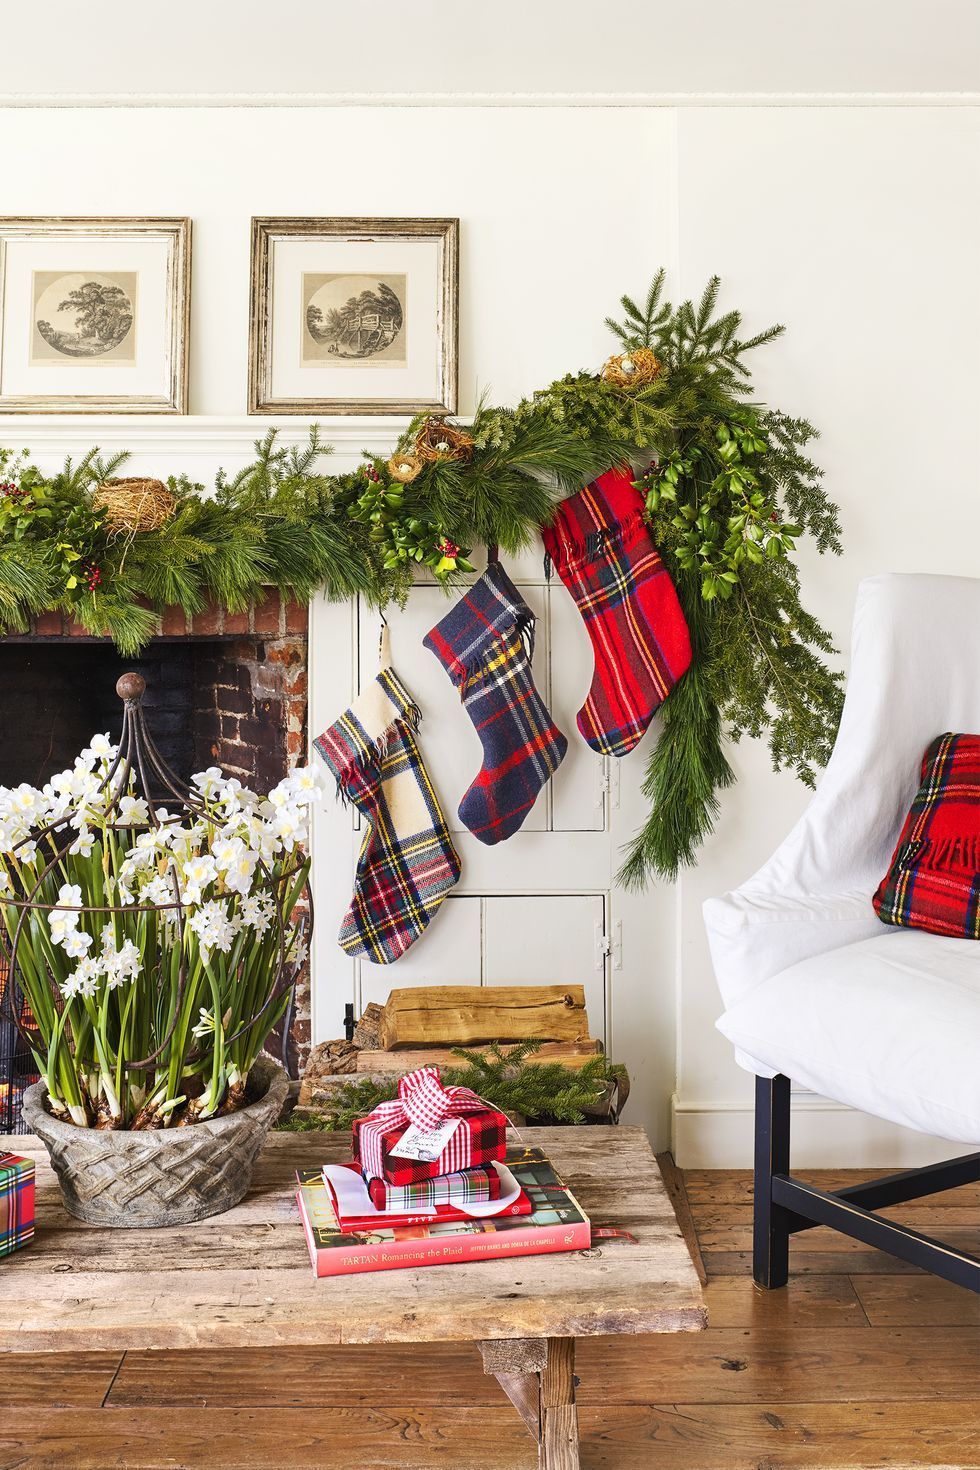 45 Festive Christmas Mantel Ideas - How to Style a Holiday Mantel